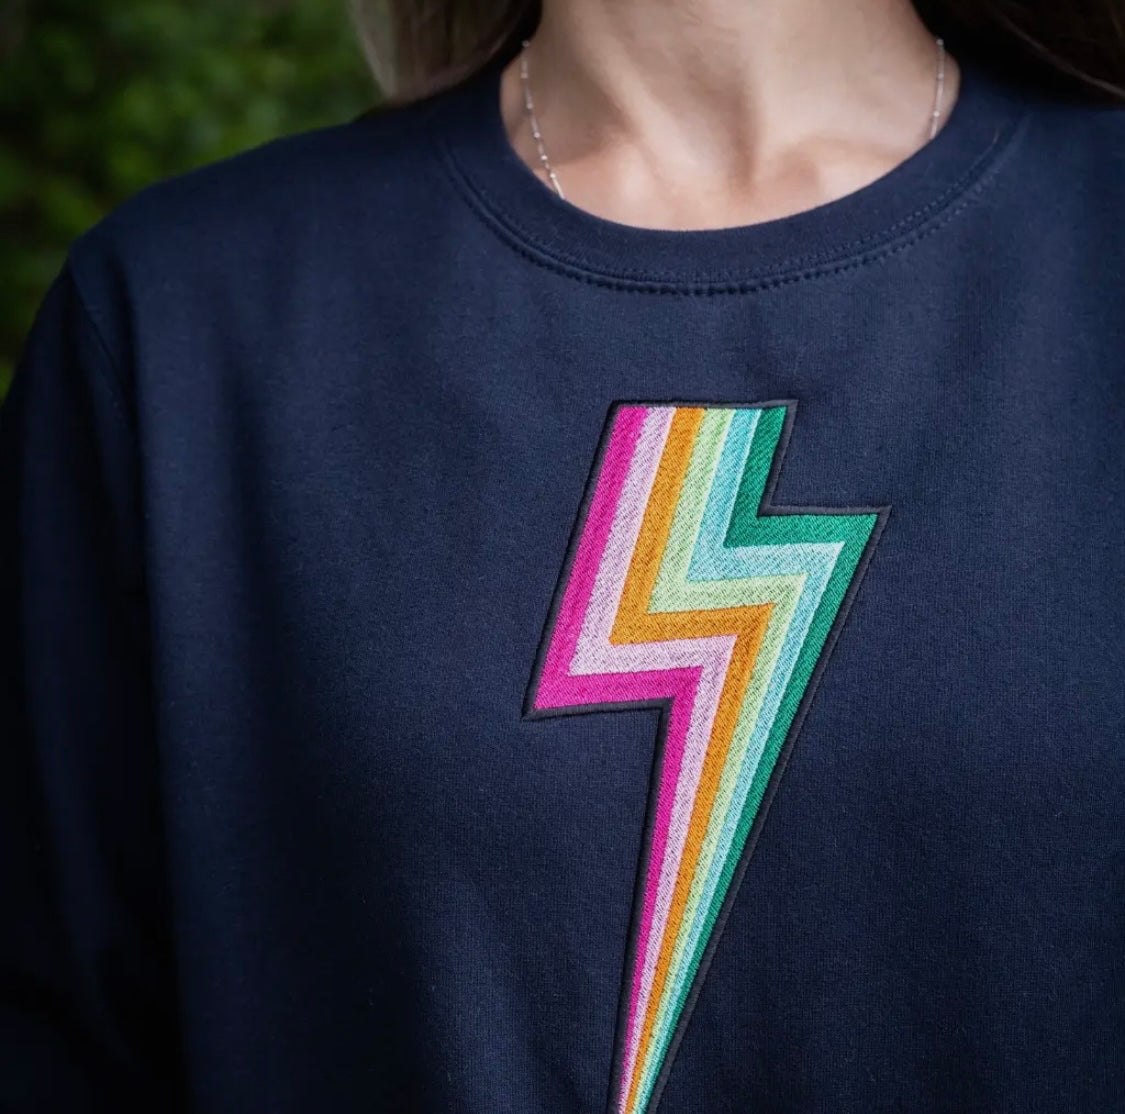 Embroidered Jewel Tone Lighting Bolt Sweatshirt